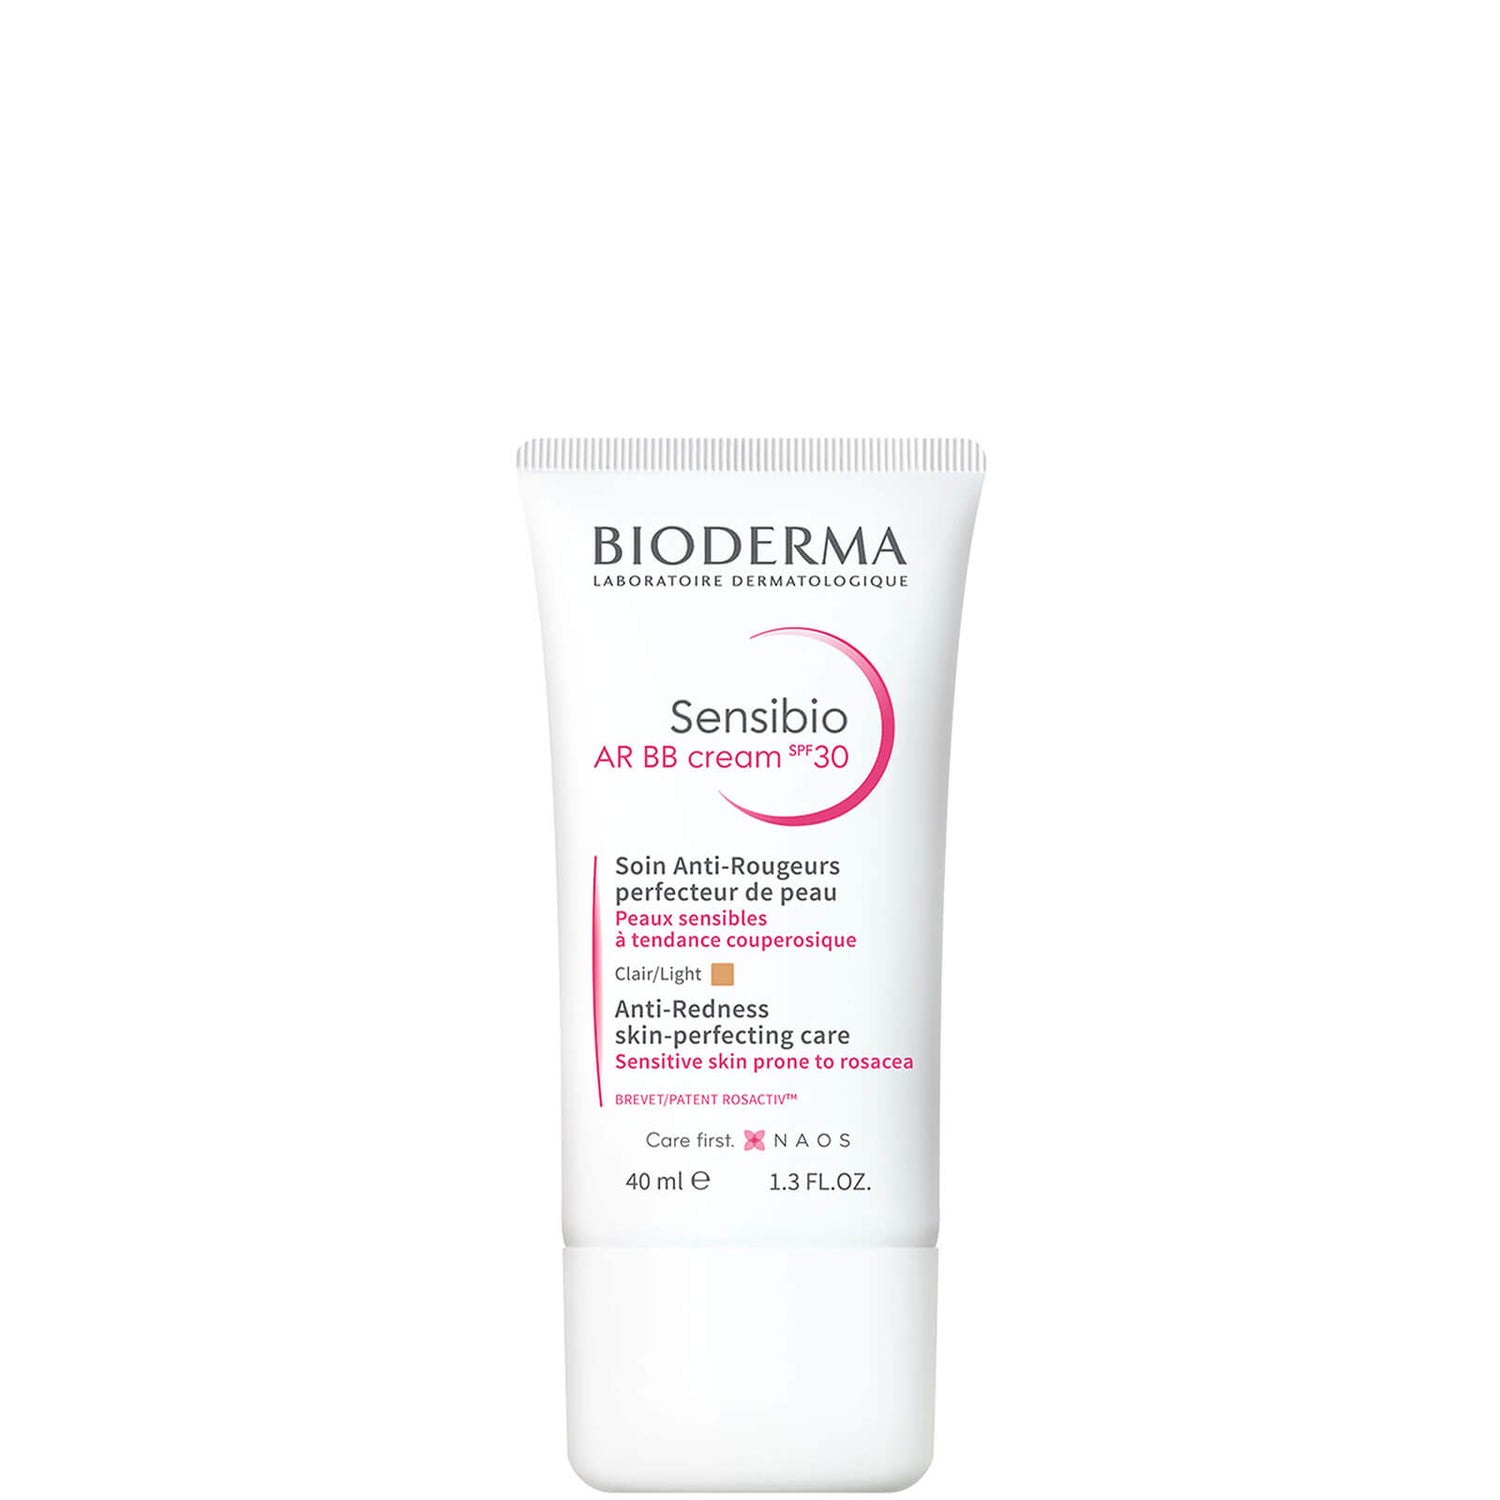 Bioderma Sensibio anti-redness tinted moisturiser with SPF 40ML